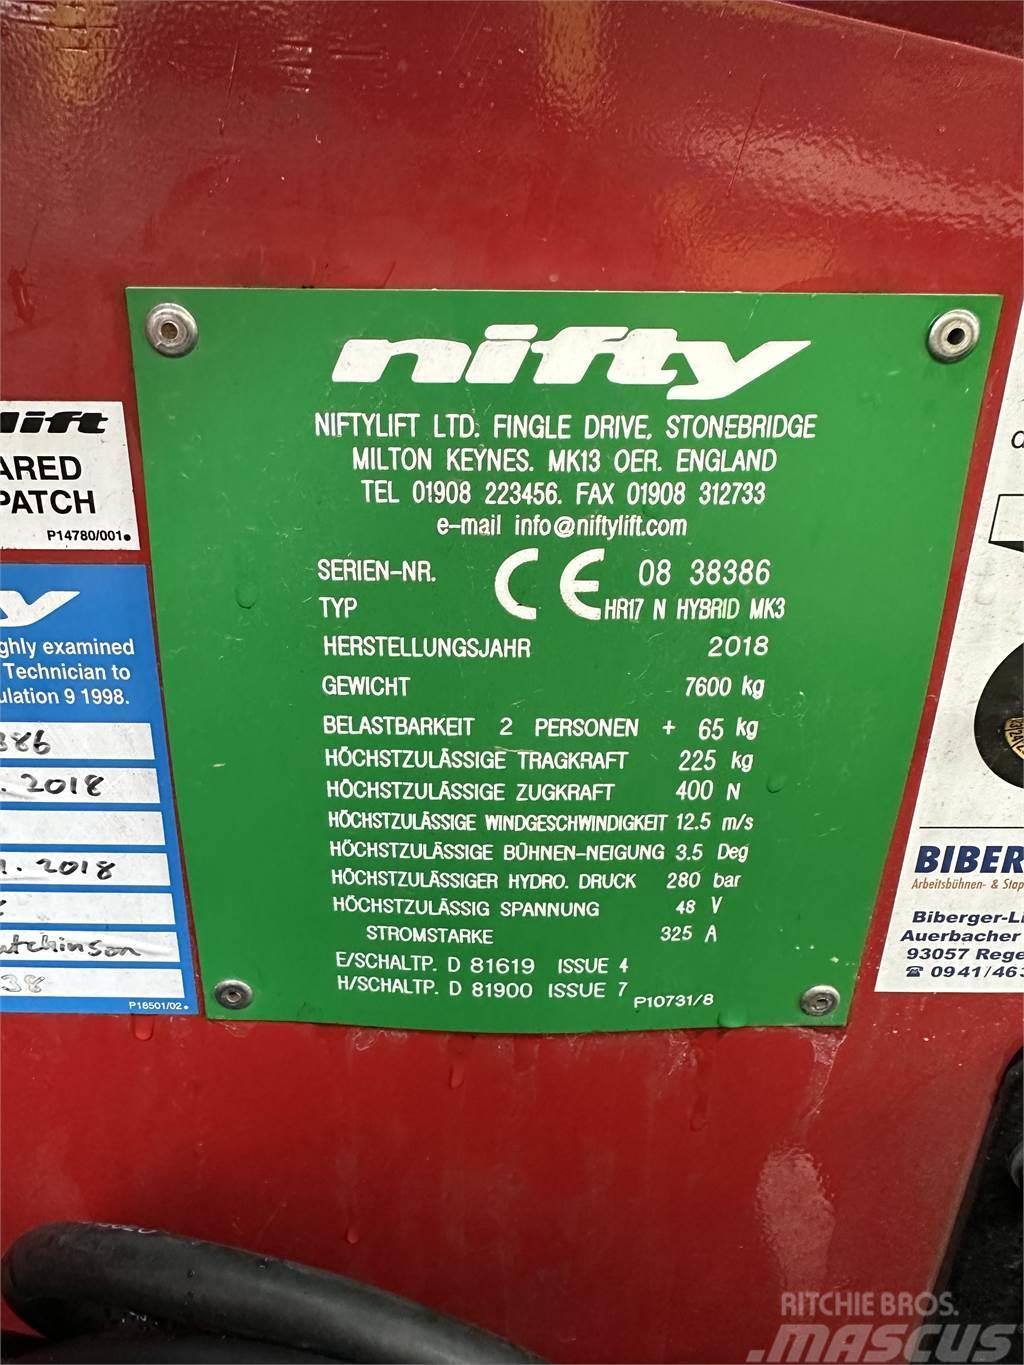 Niftylift HR 17 N HYBRID MK3 Articulated boom lifts